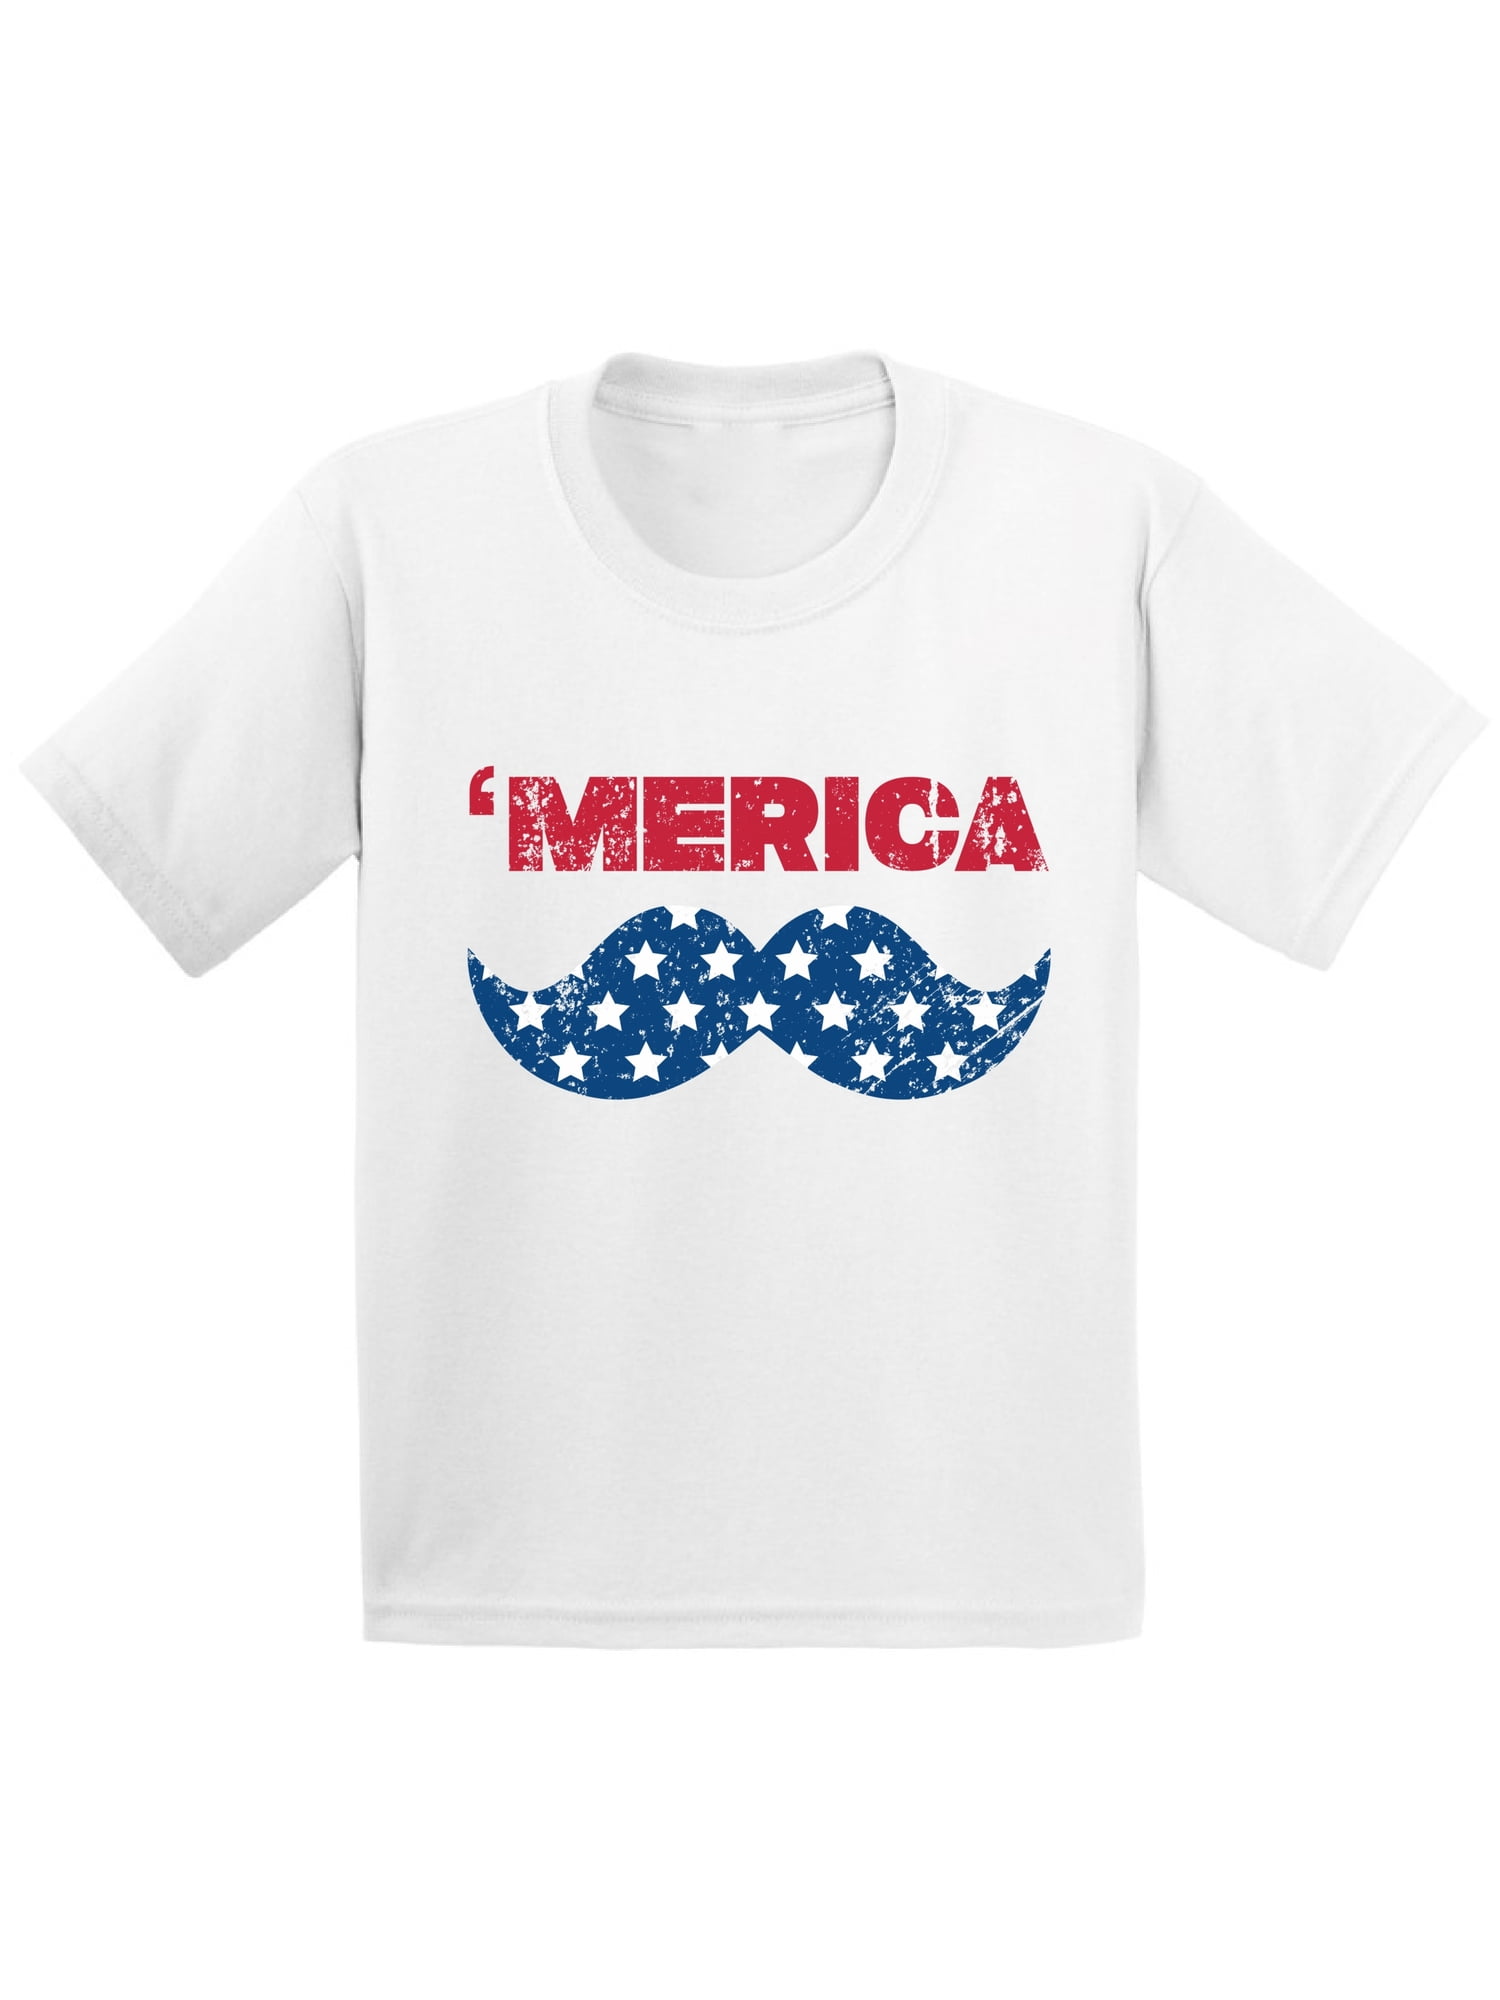 Merica Shirt Merican Flag Lips Shirt America Patriotic Shirt USA 4th of July Shirt America Lips Shirt USA Shirt Patriotic Lips Shirt